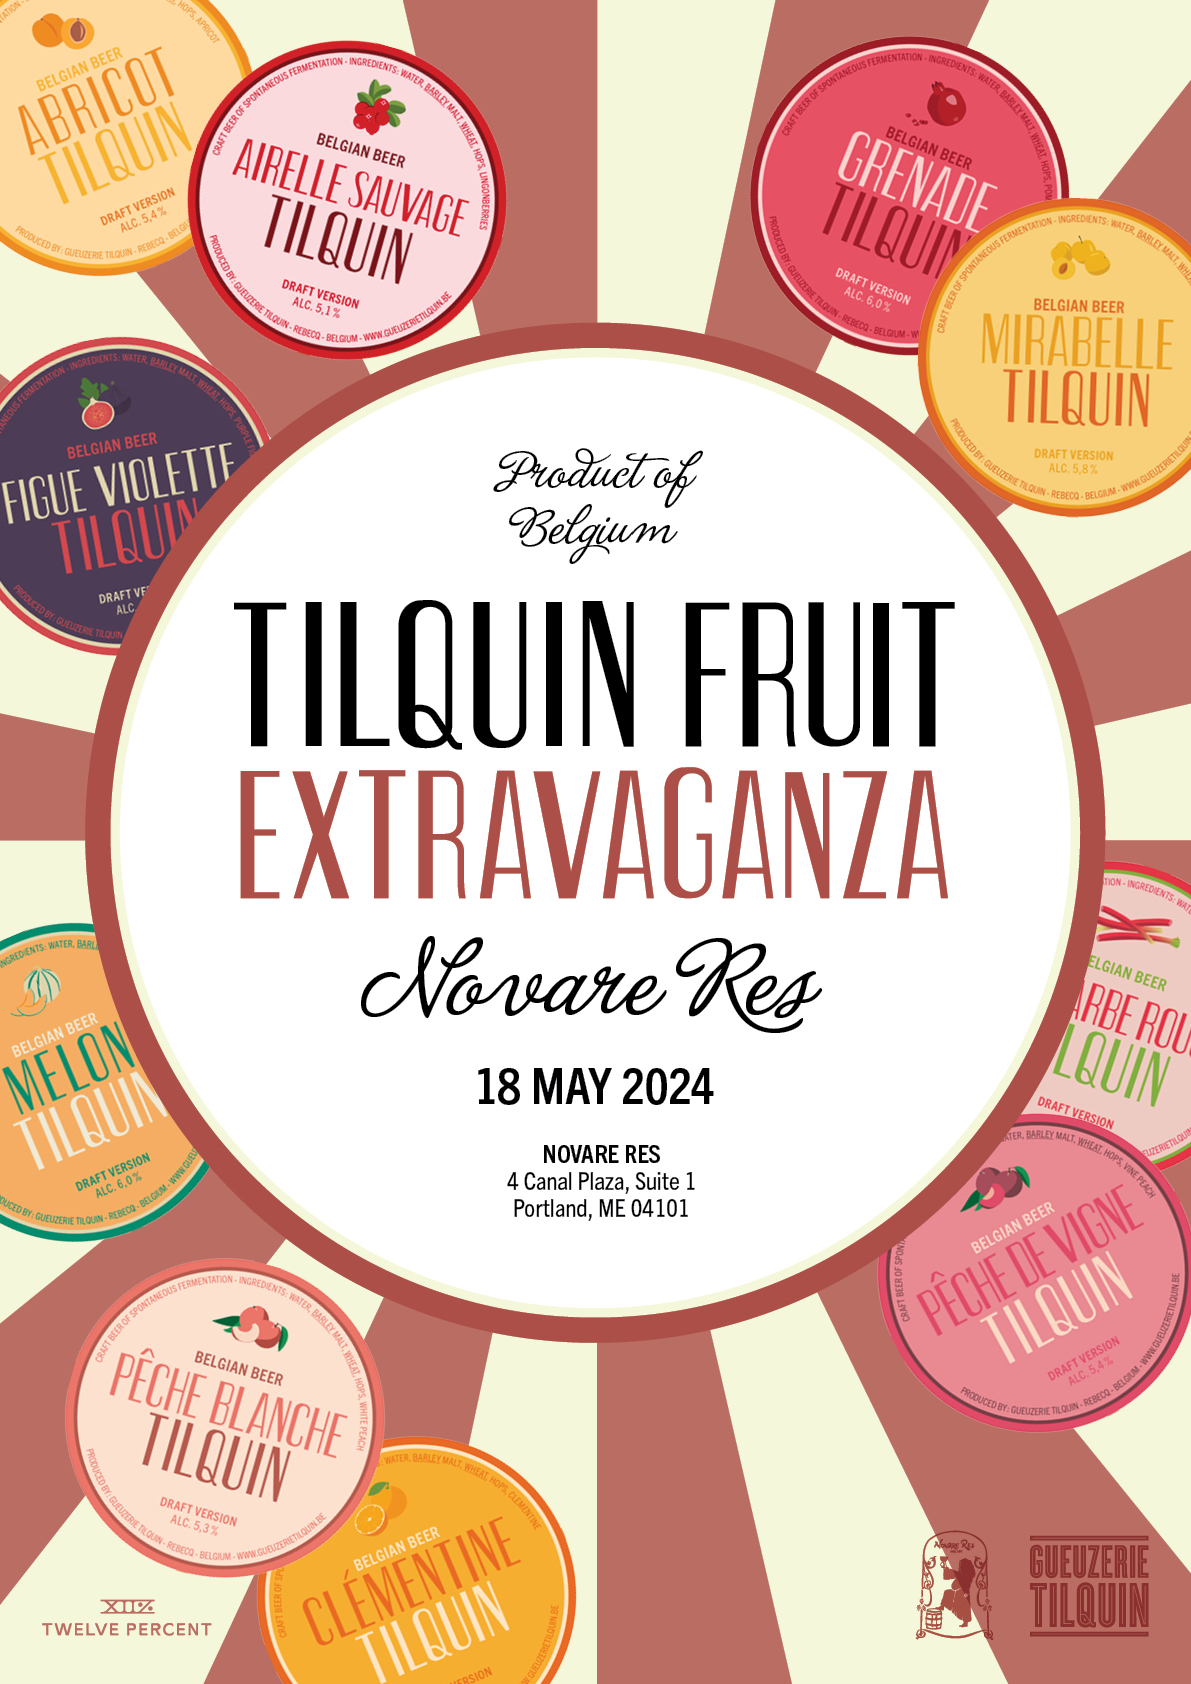 Tilquin Fruit Extravaganza at Novare Res!